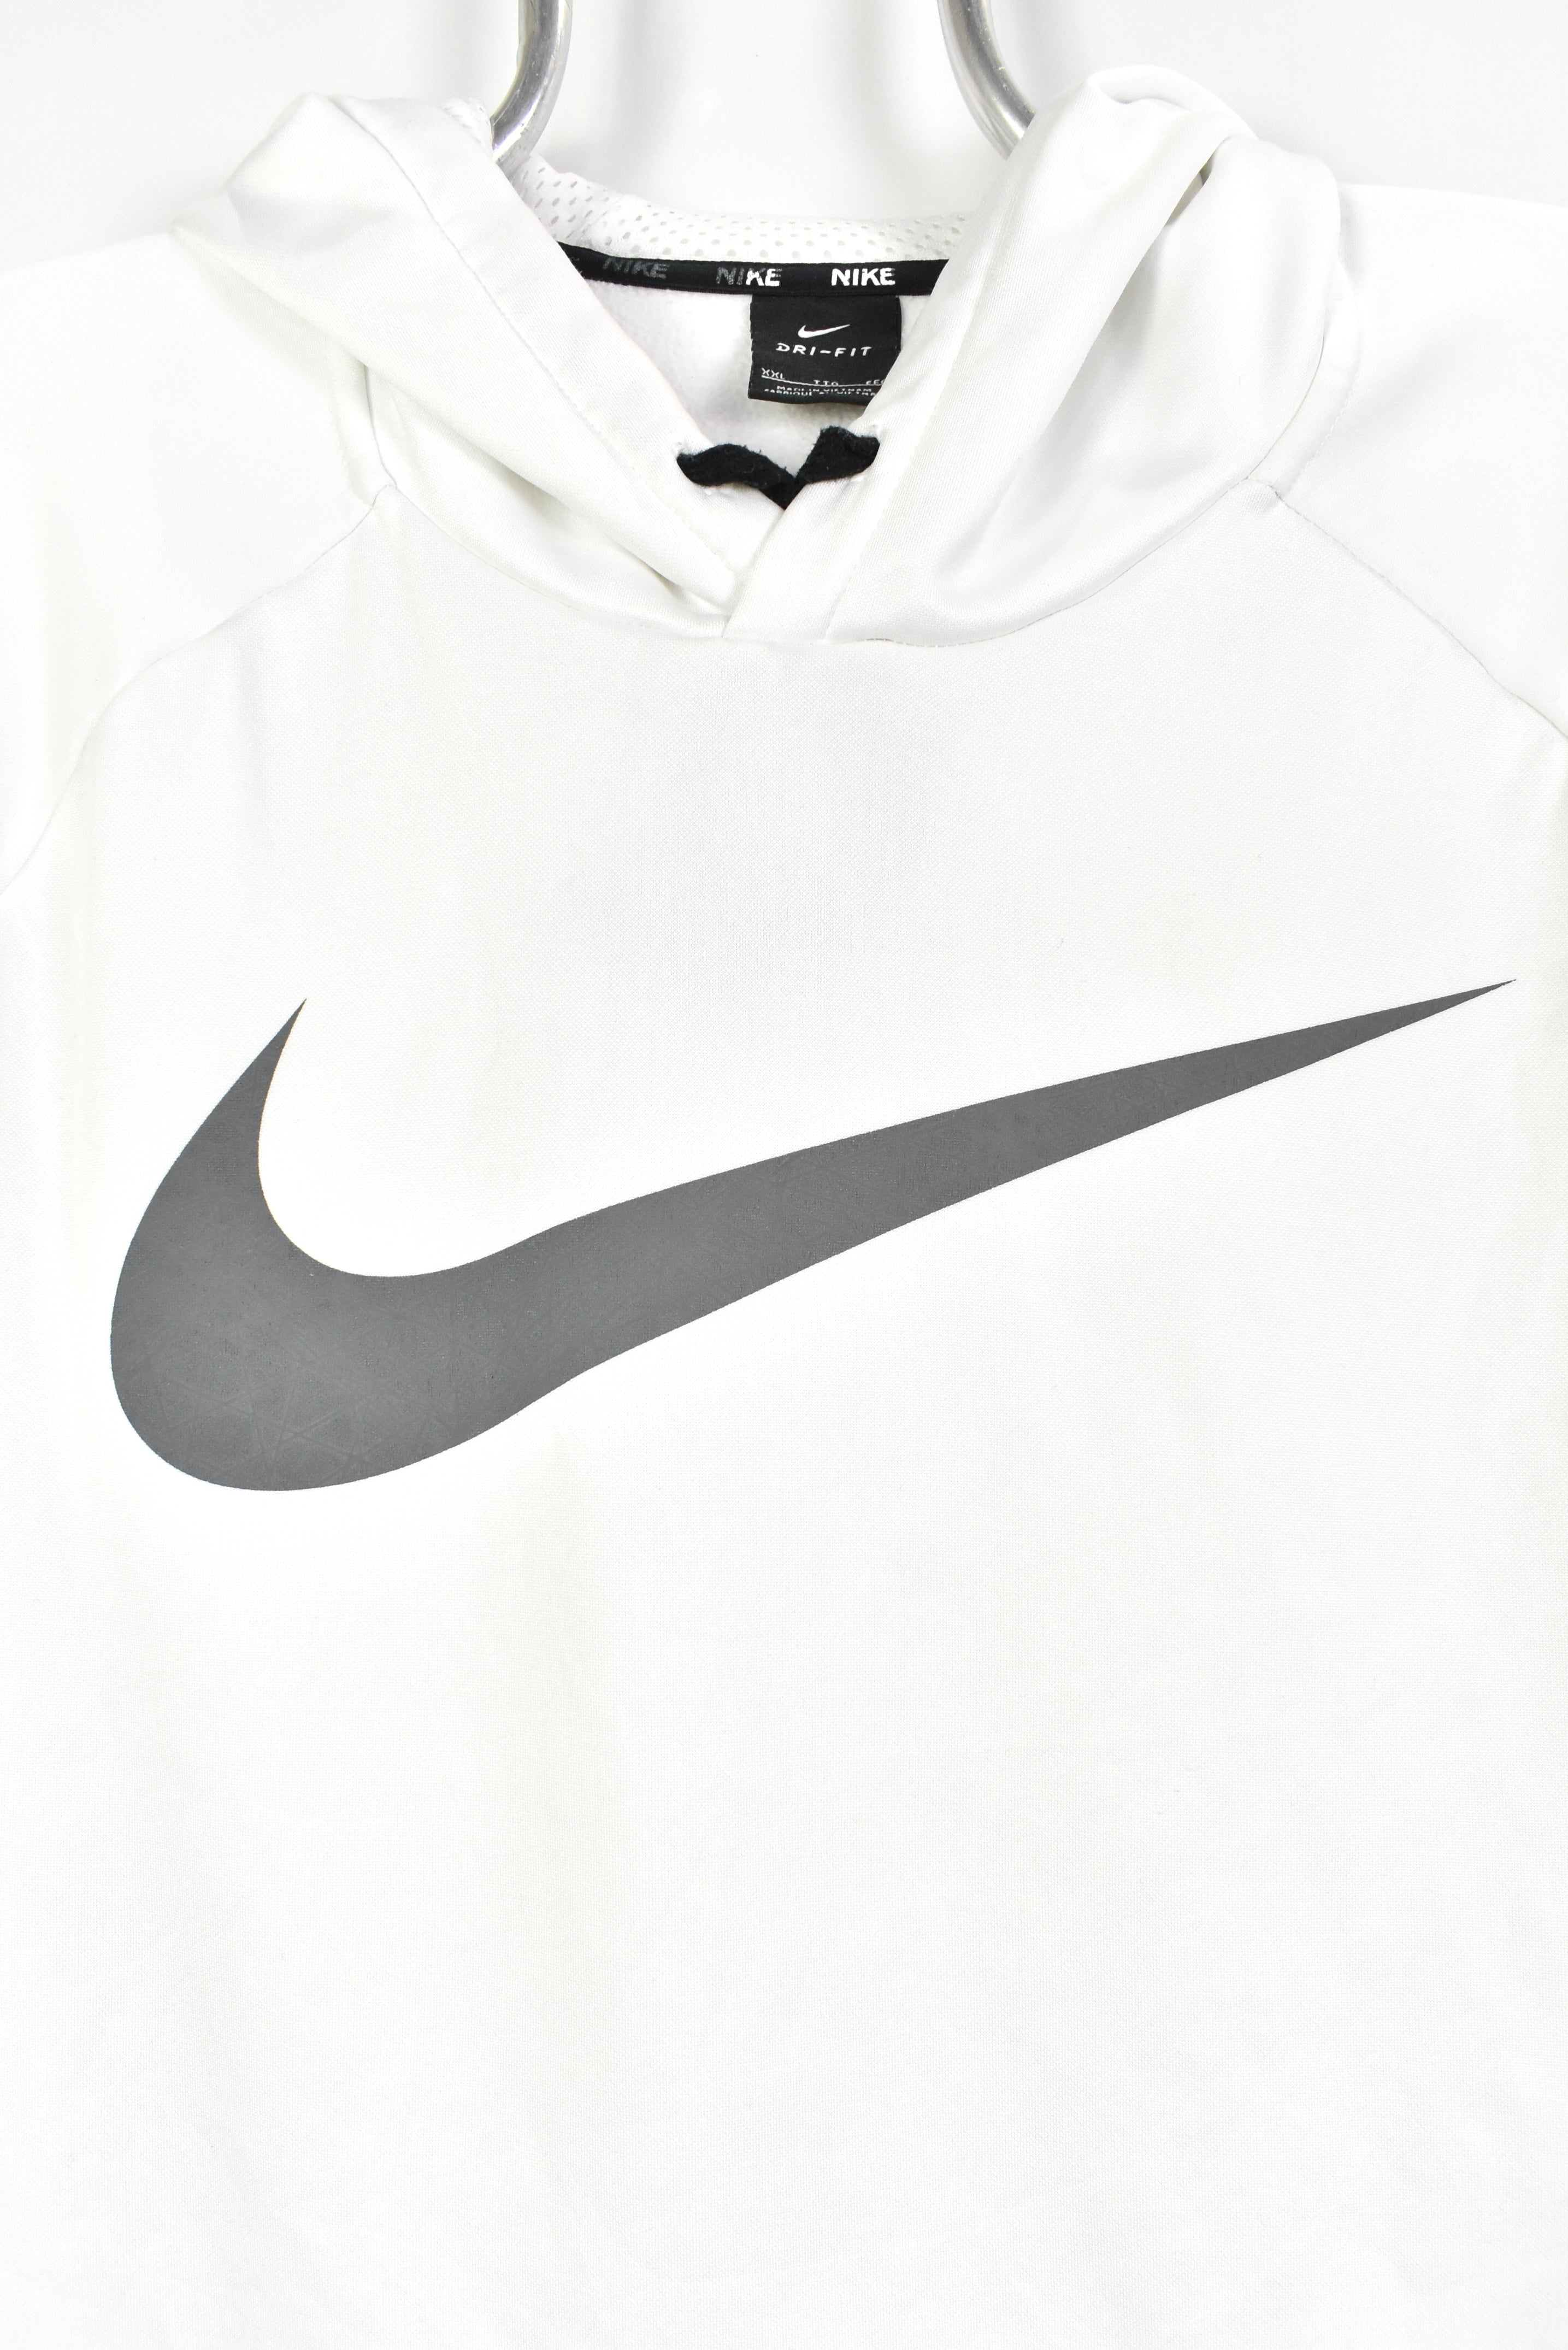 Vintage Nike hoodie, pullover swoosh graphic sweatshirt - XXL, white NIKE